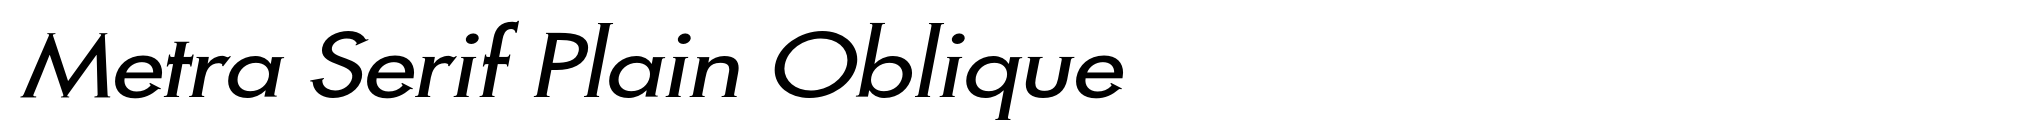 Metra Serif Plain Oblique image